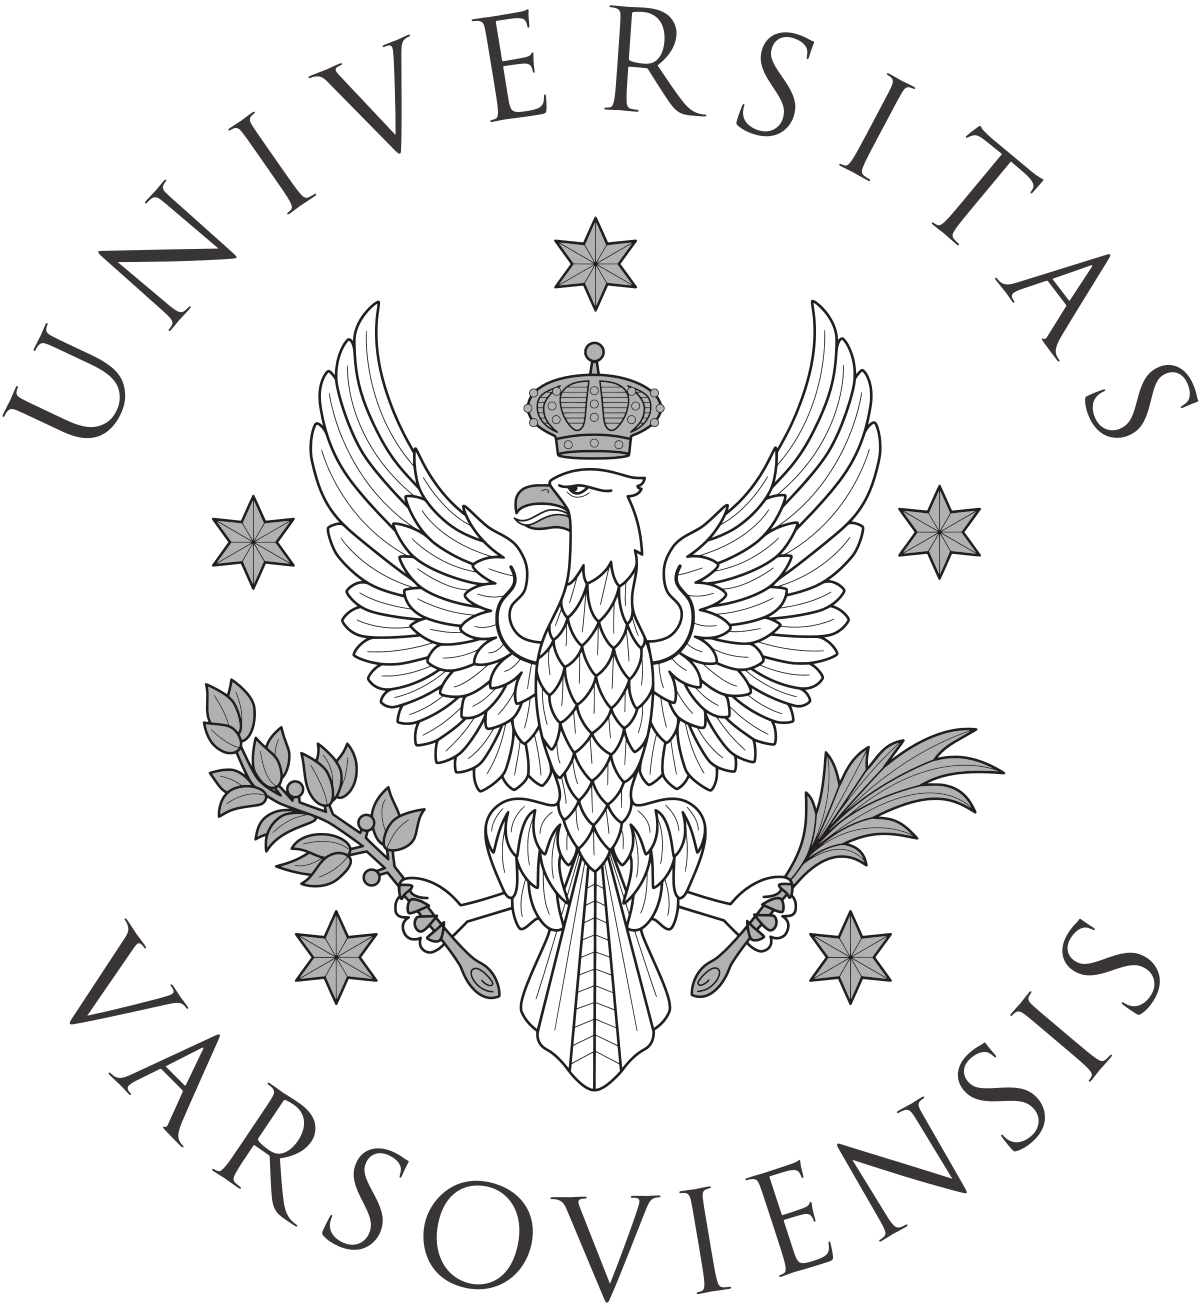 Varşova Üniversitesi